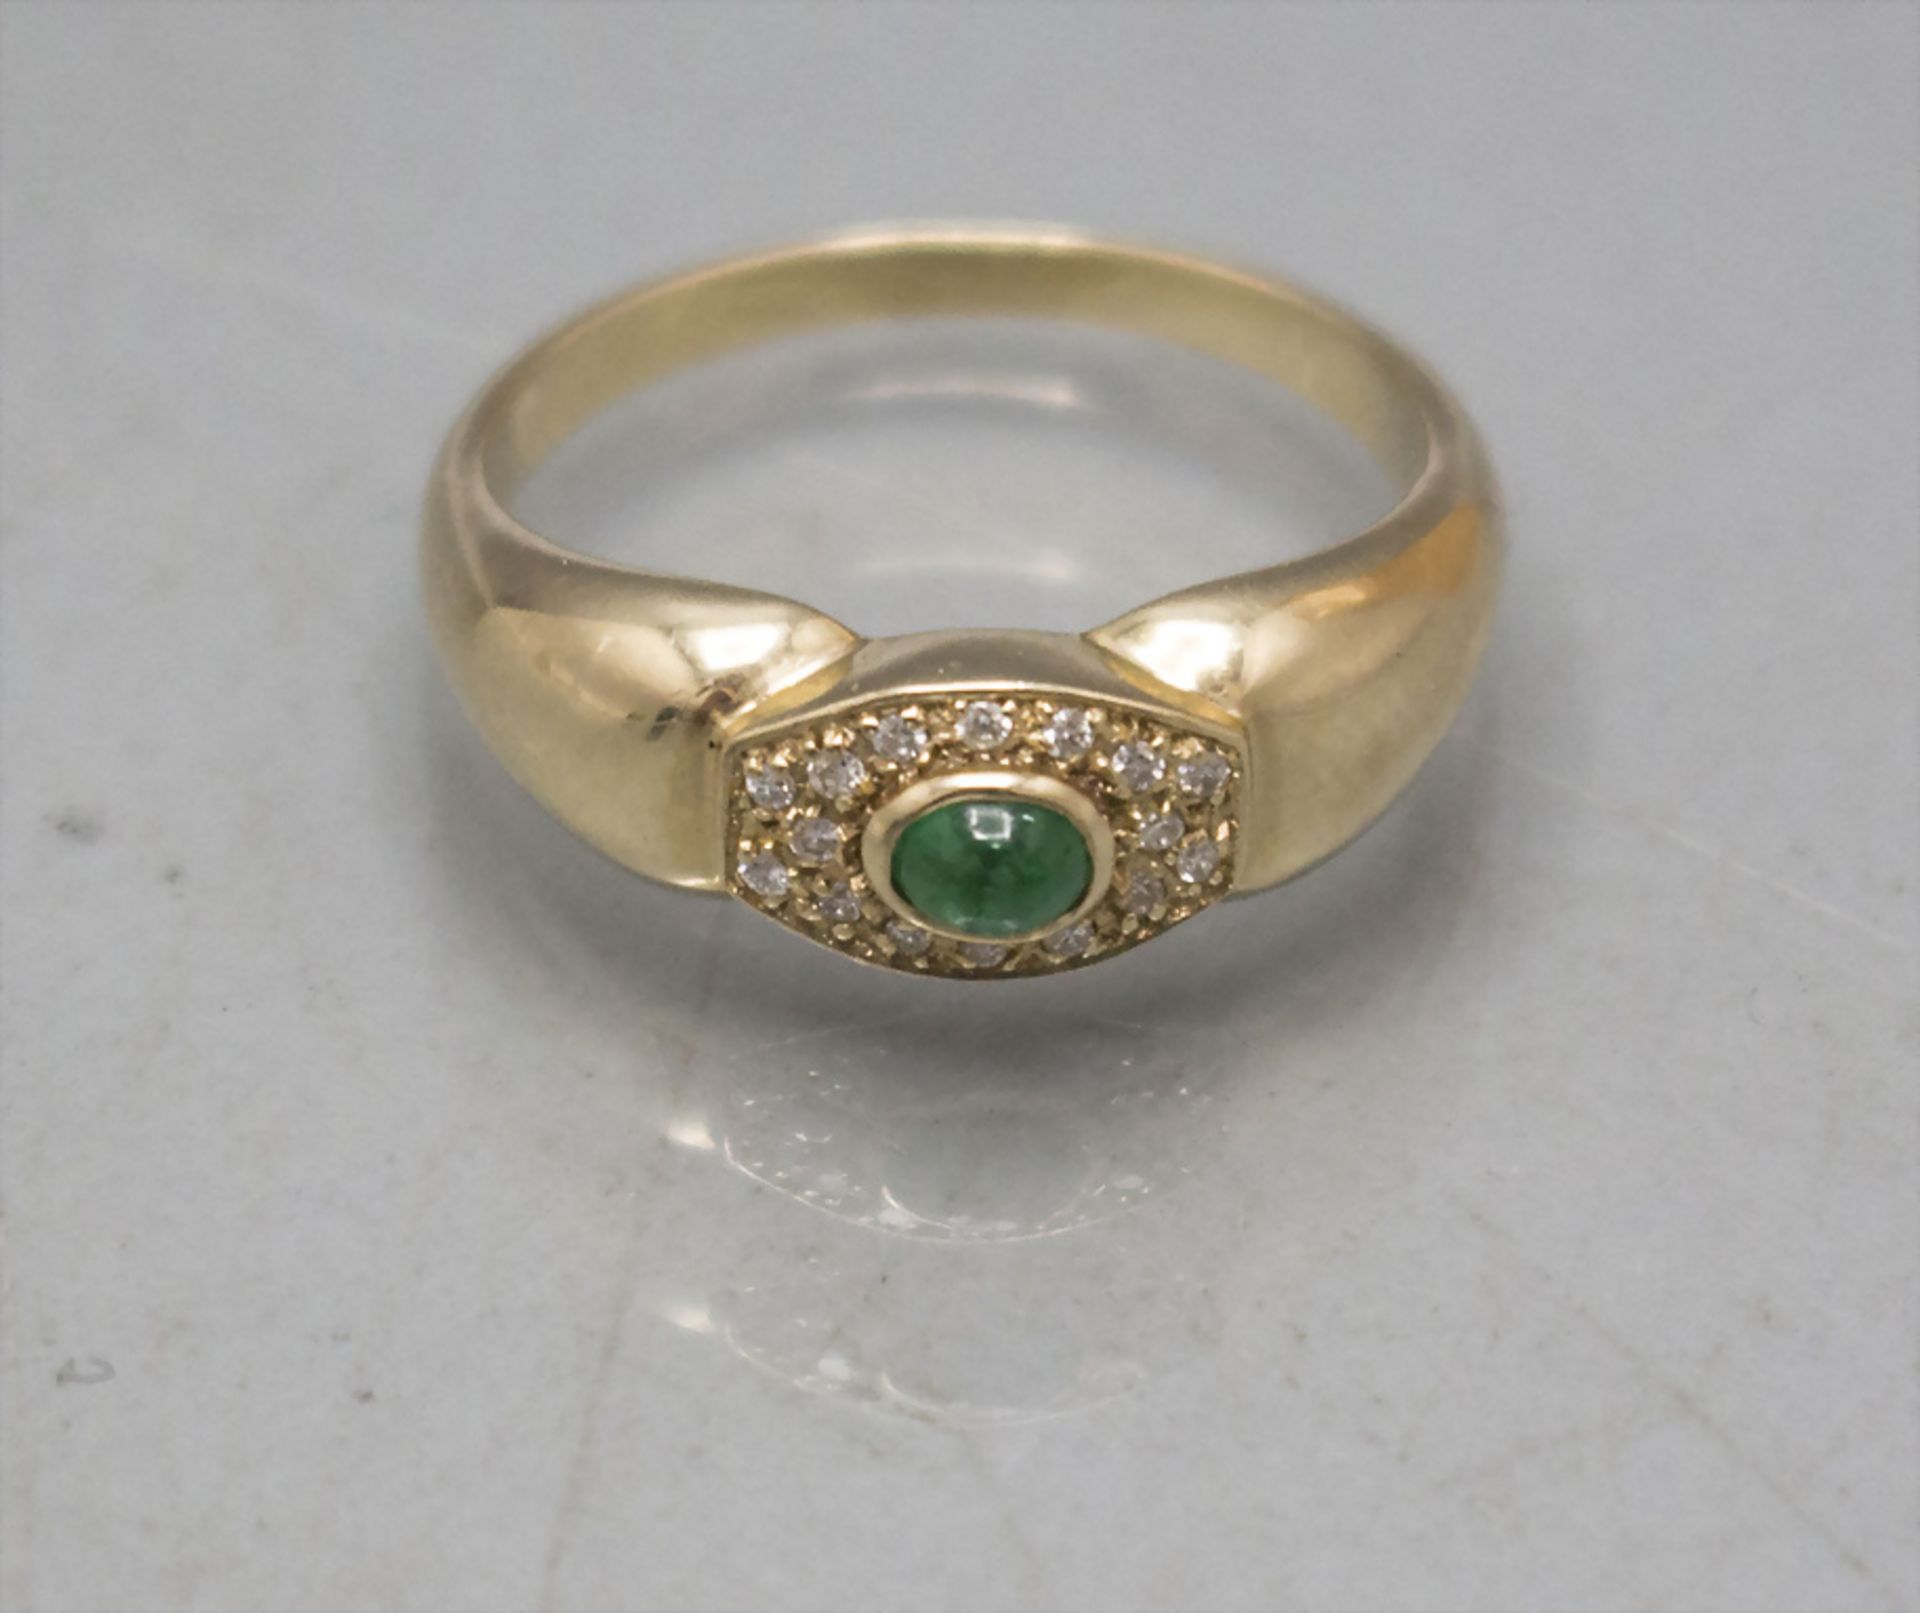 Damenring mit Smaragd und Brillanten / A ladies 14 ct gold ring with emerald and diamonds